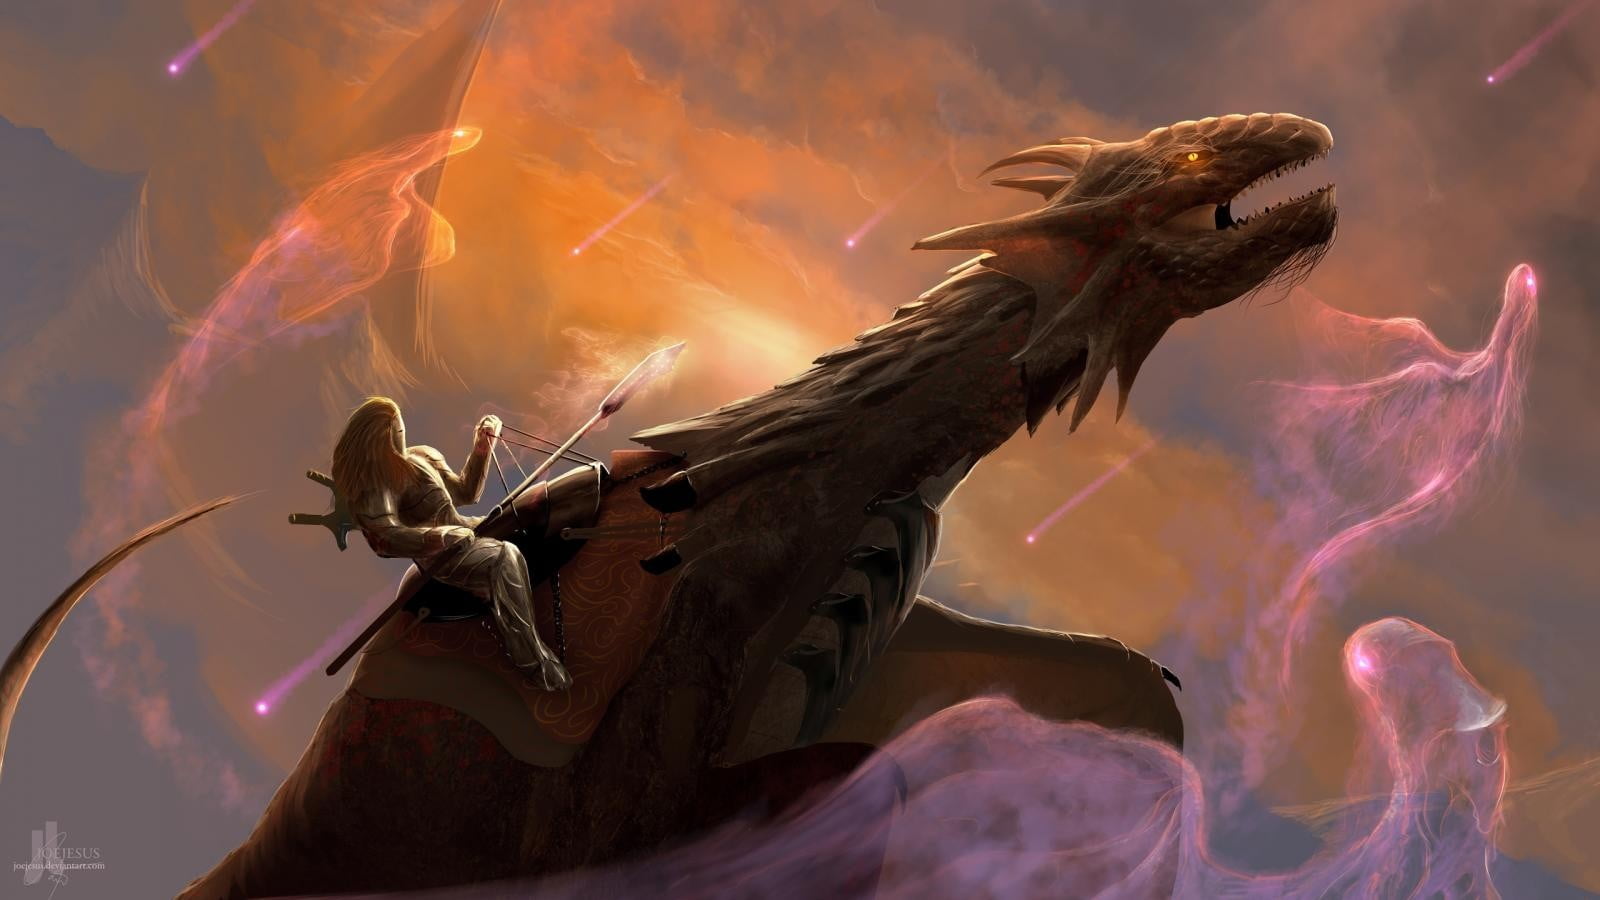 man holding spear riding dragon illustration, digital art, drawing, sky, dragon